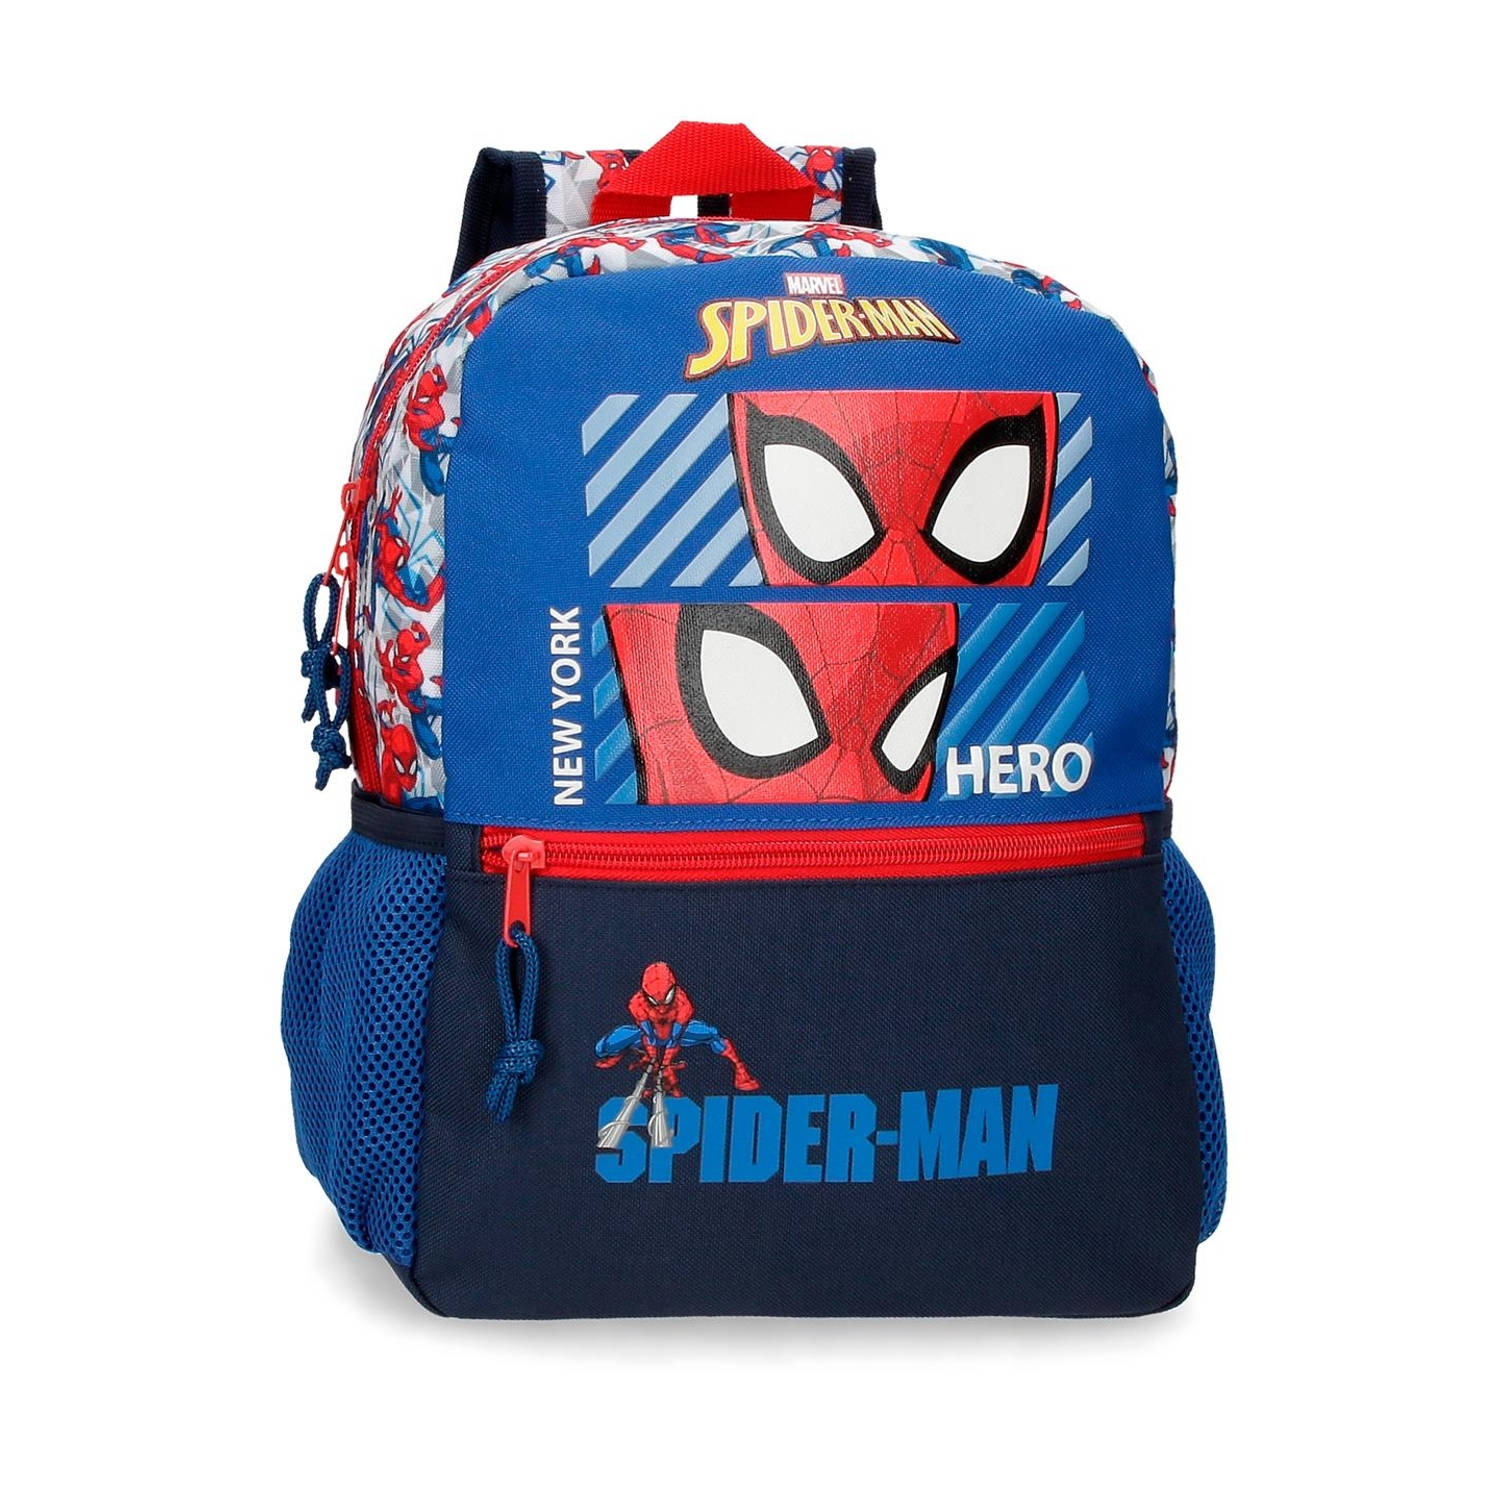 Spiderman jongens rugzak Hero blauw